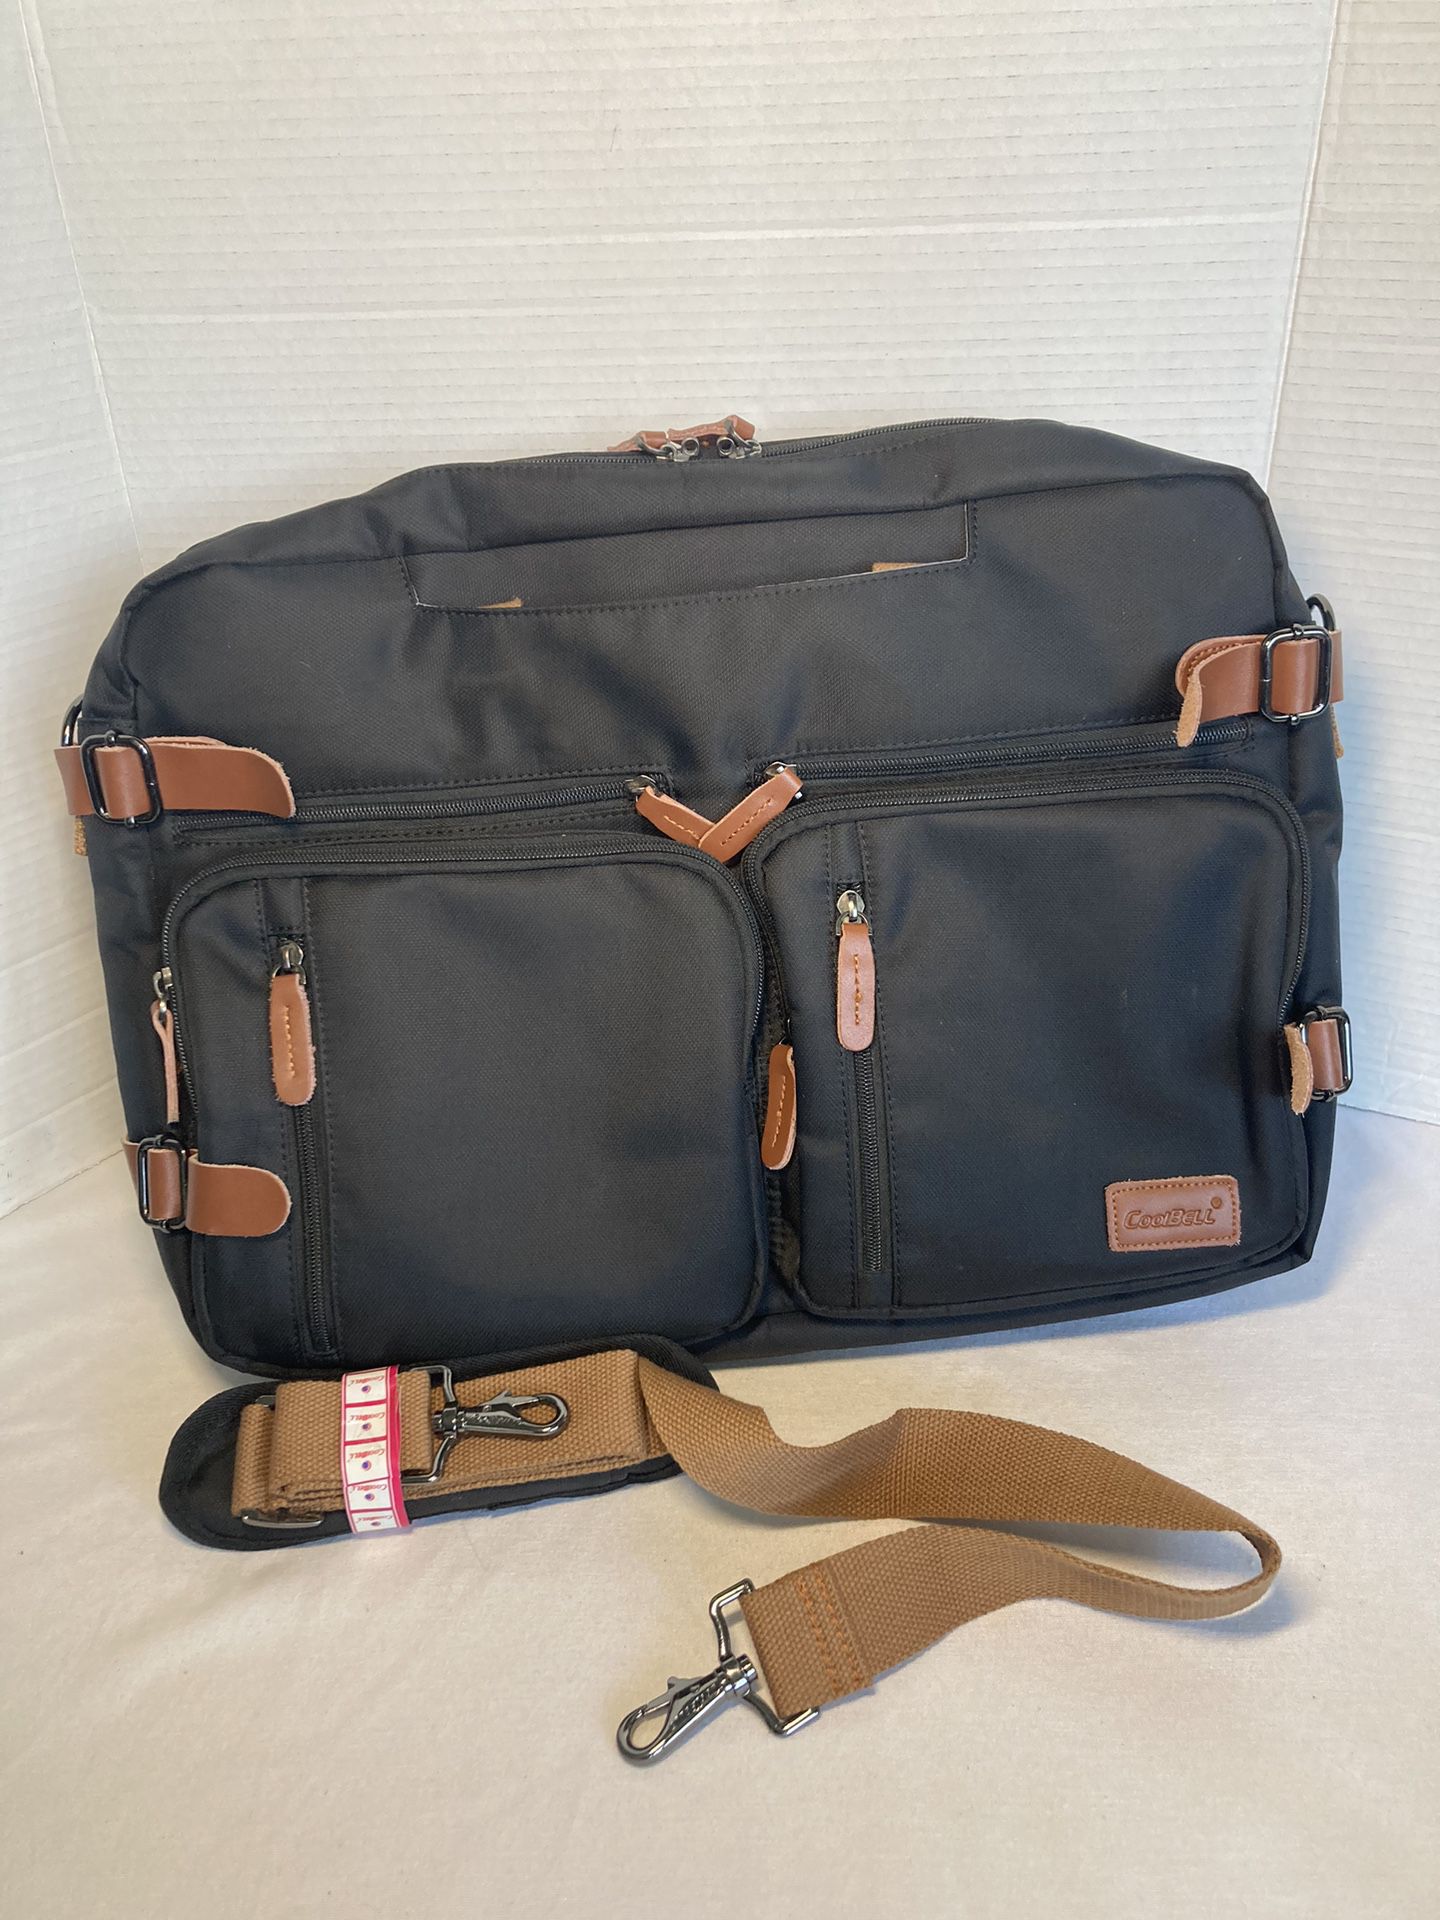 CoolBELL Convertible Backpack Messenger Bag  Bag Laptop Case Handbag .